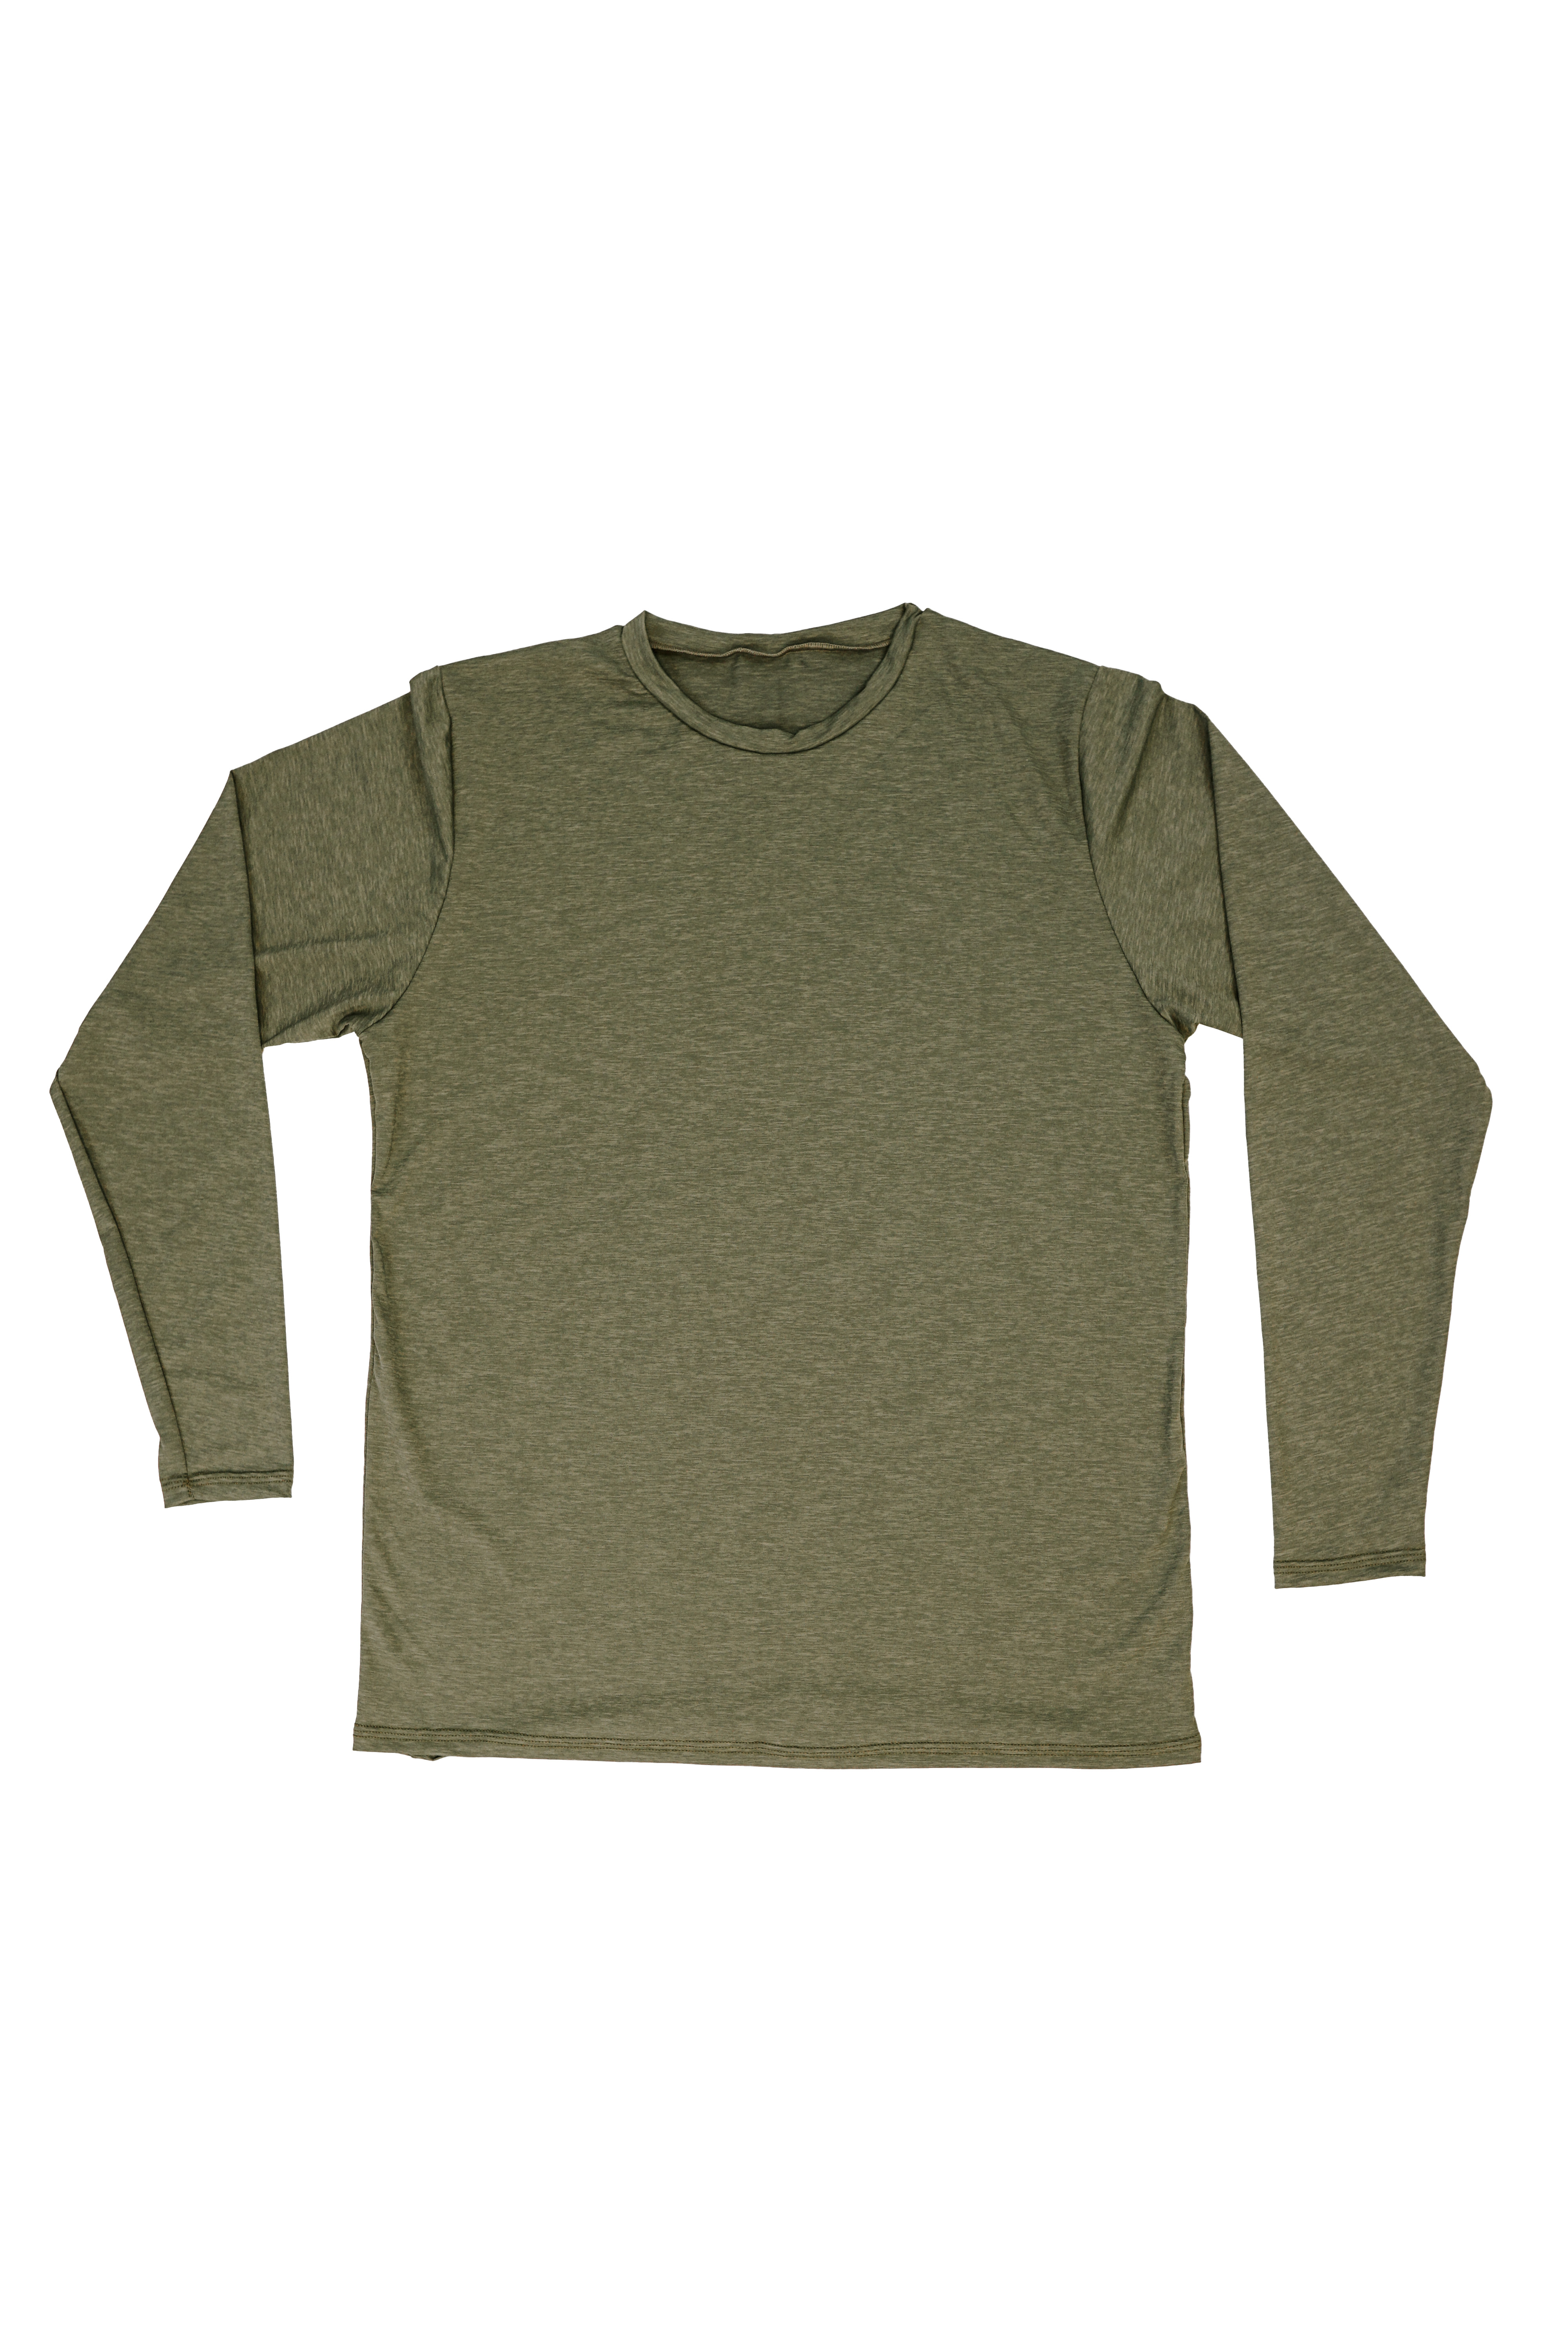 Mens Long Sleeve Sun Shirts Variety- 3 Pack - Shop Ocean Tec